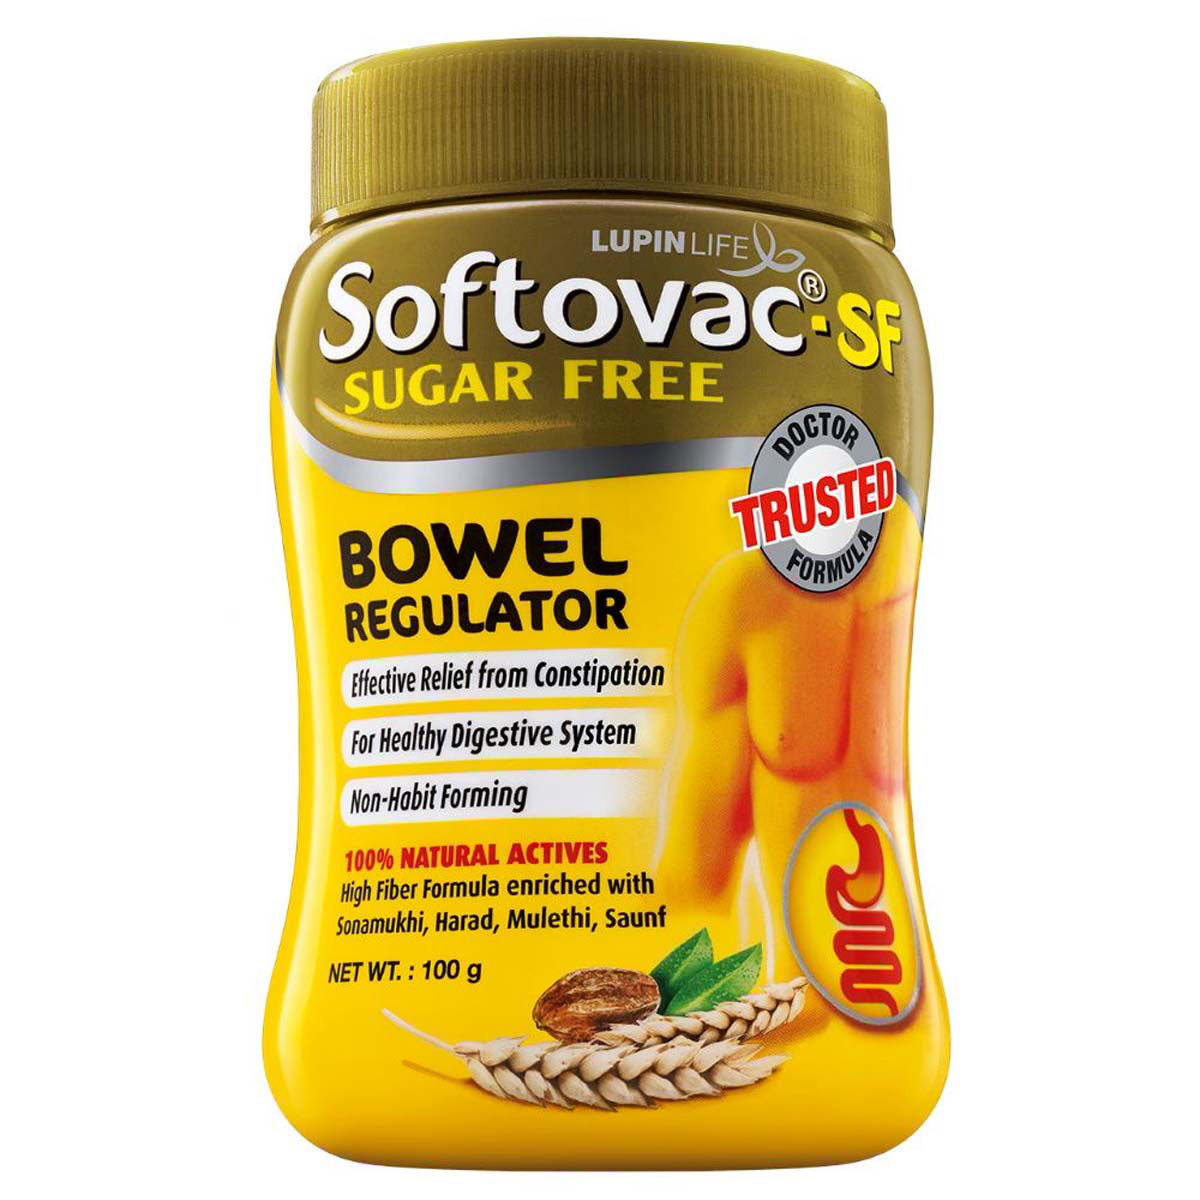 Softovac-SF Sugar Free Bowel Regulator Powder, 100 gm, Pack of 1 